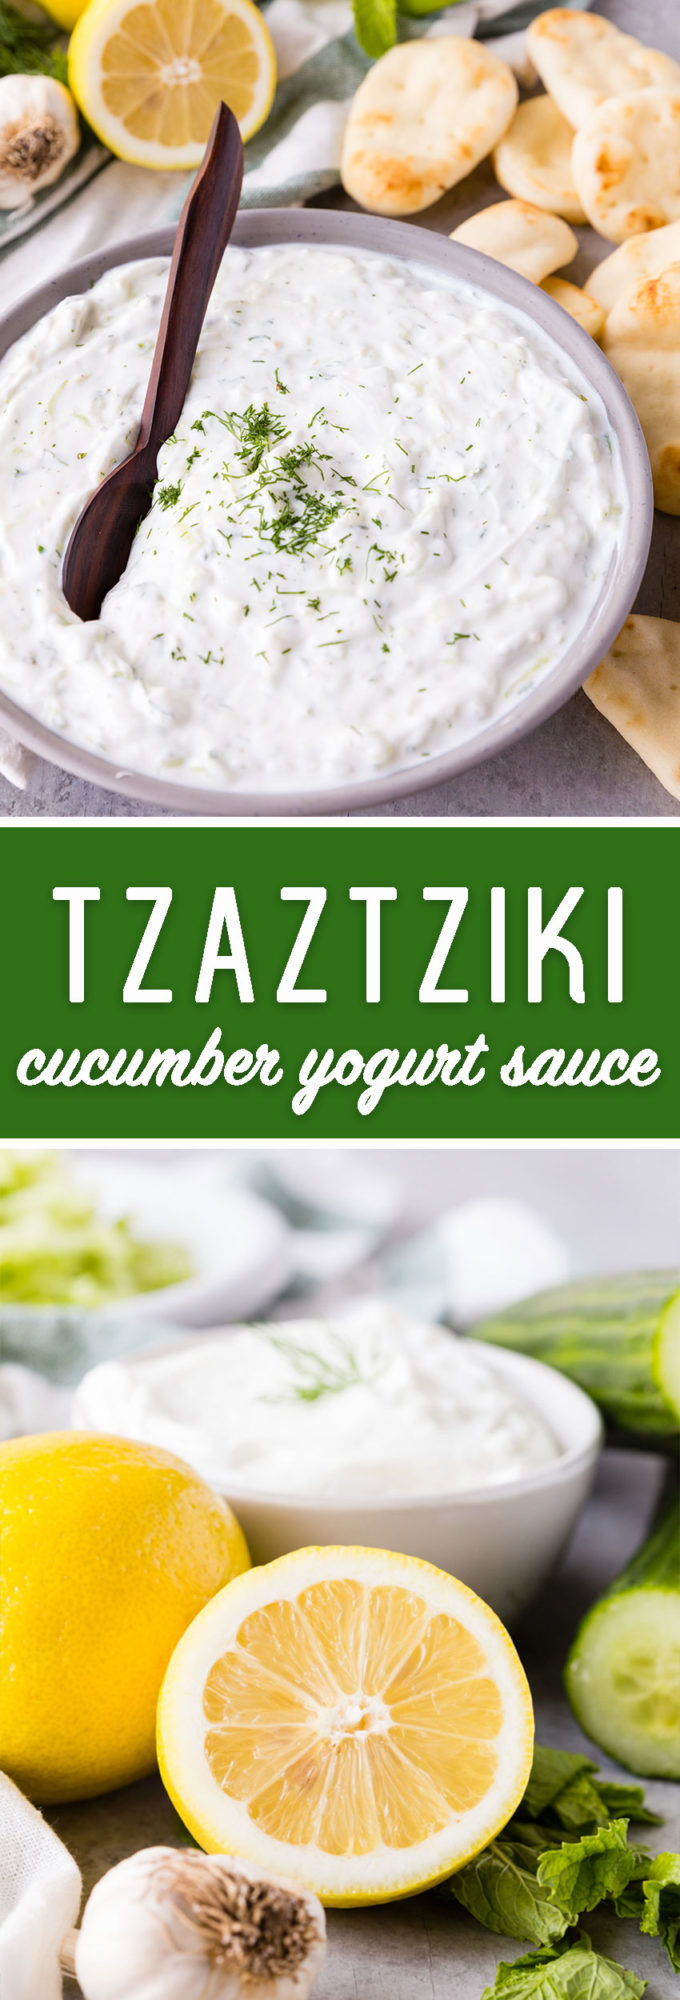 cucumber greek yogurt sauce, tzatziki is flavorful and delicious